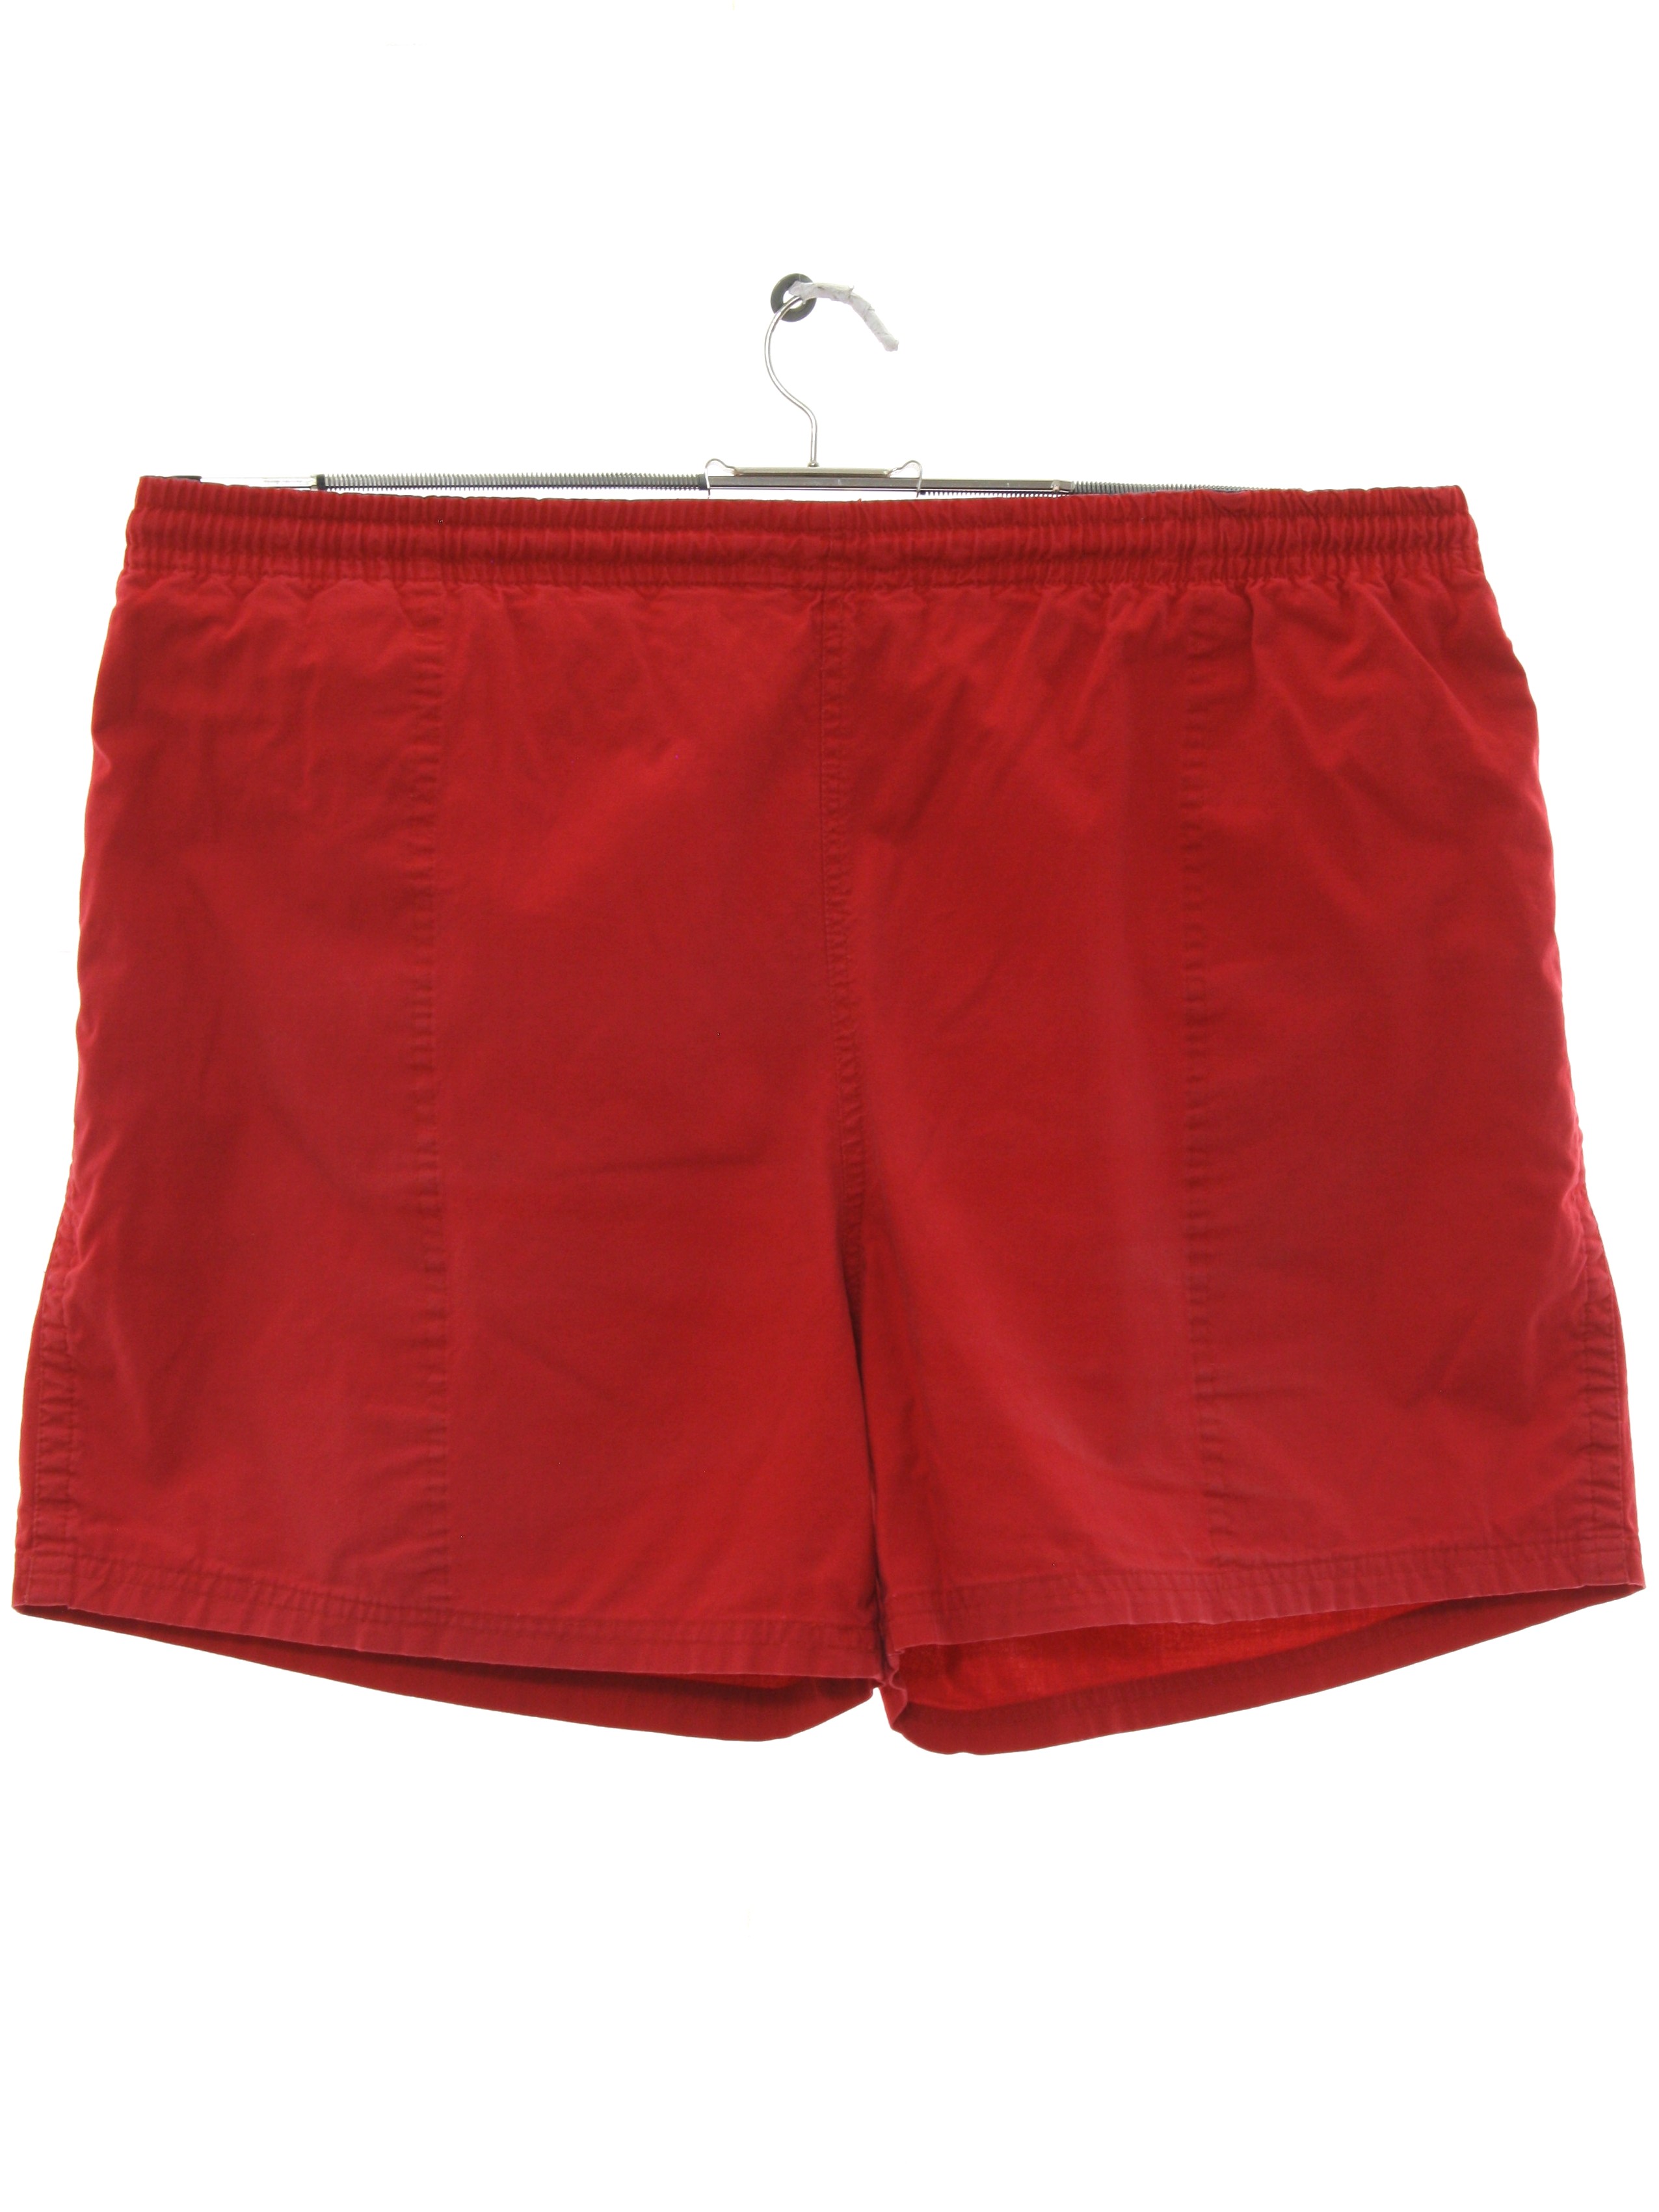 1990's Swimsuit/Swimwear (High Sierra): 90s -High Sierra- Mens red ...